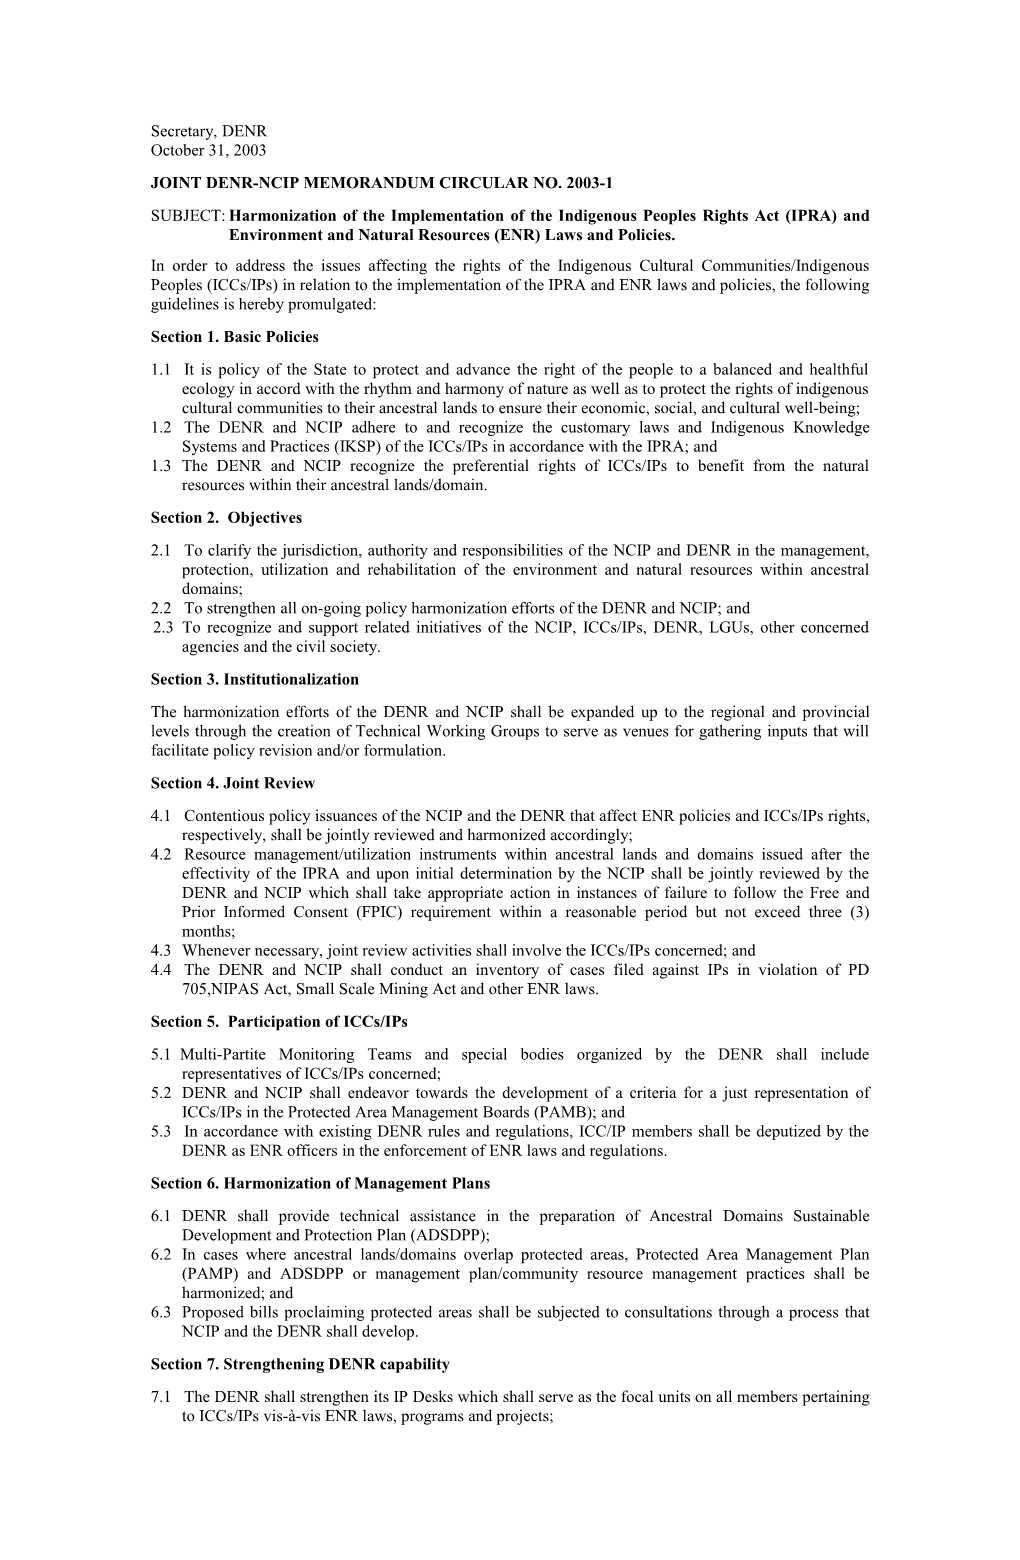 Joint Denr-Ncip Memorandum Circular No. 2003-1